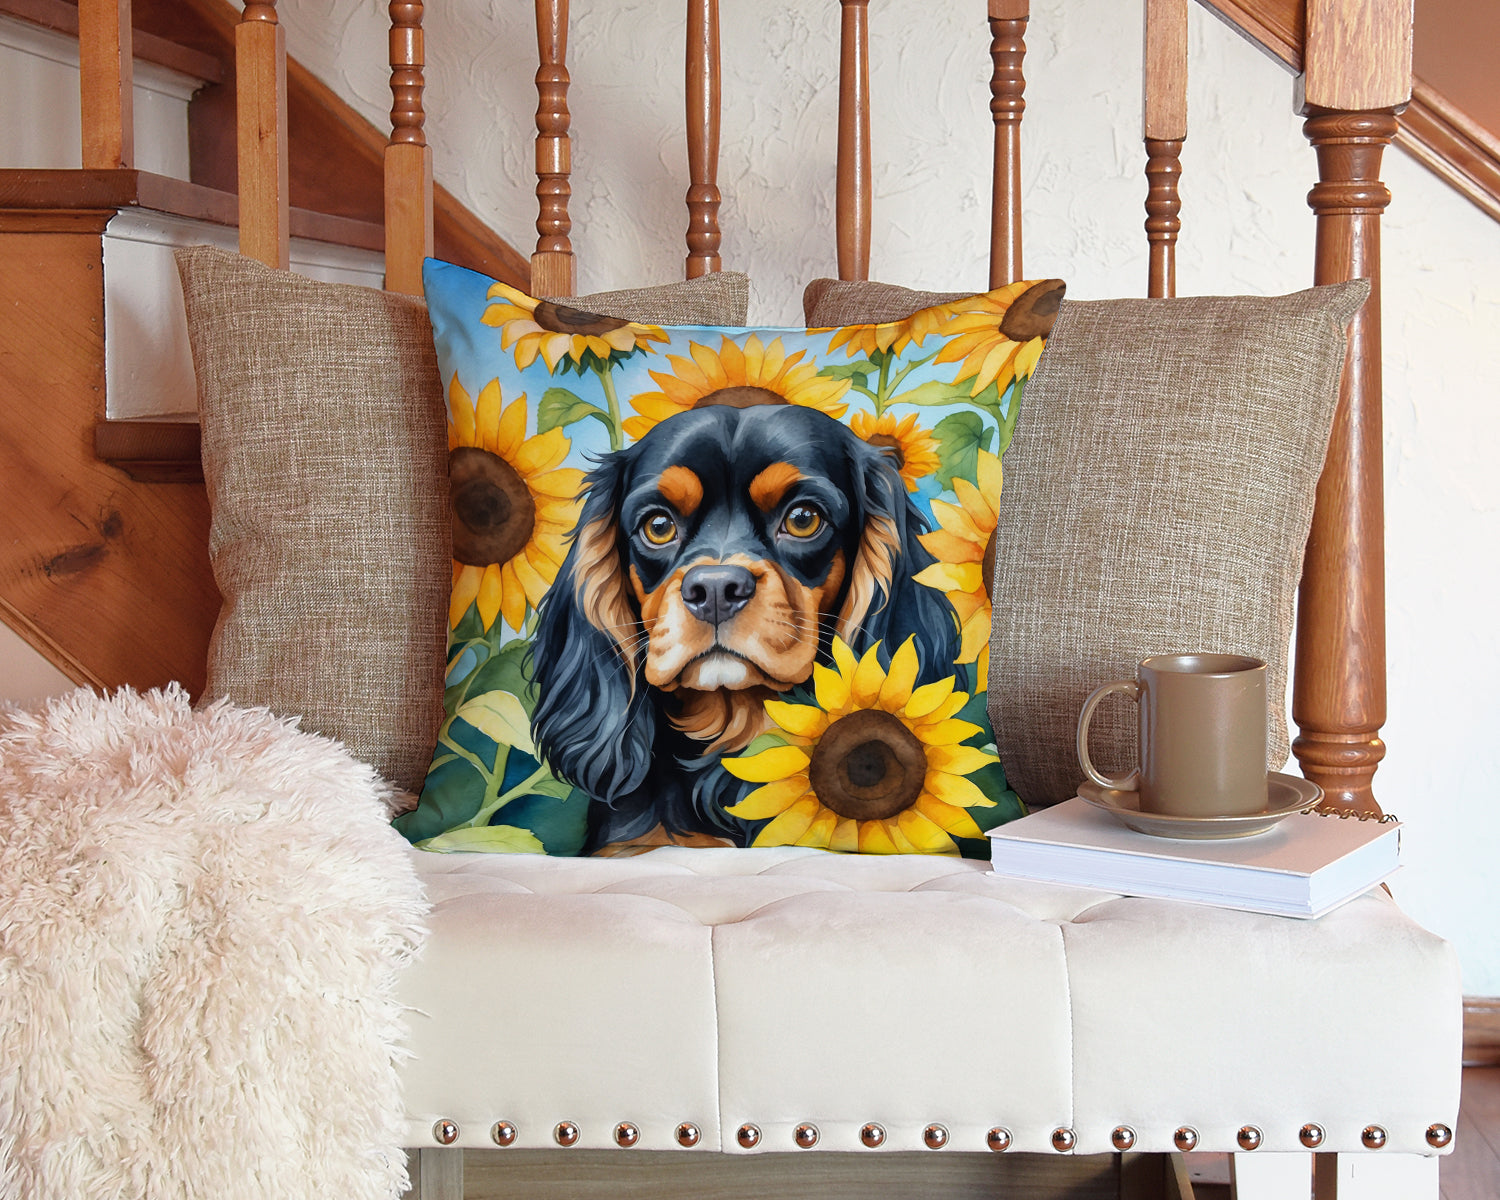 Cavalier Spaniel in Sunflowers Throw Pillow